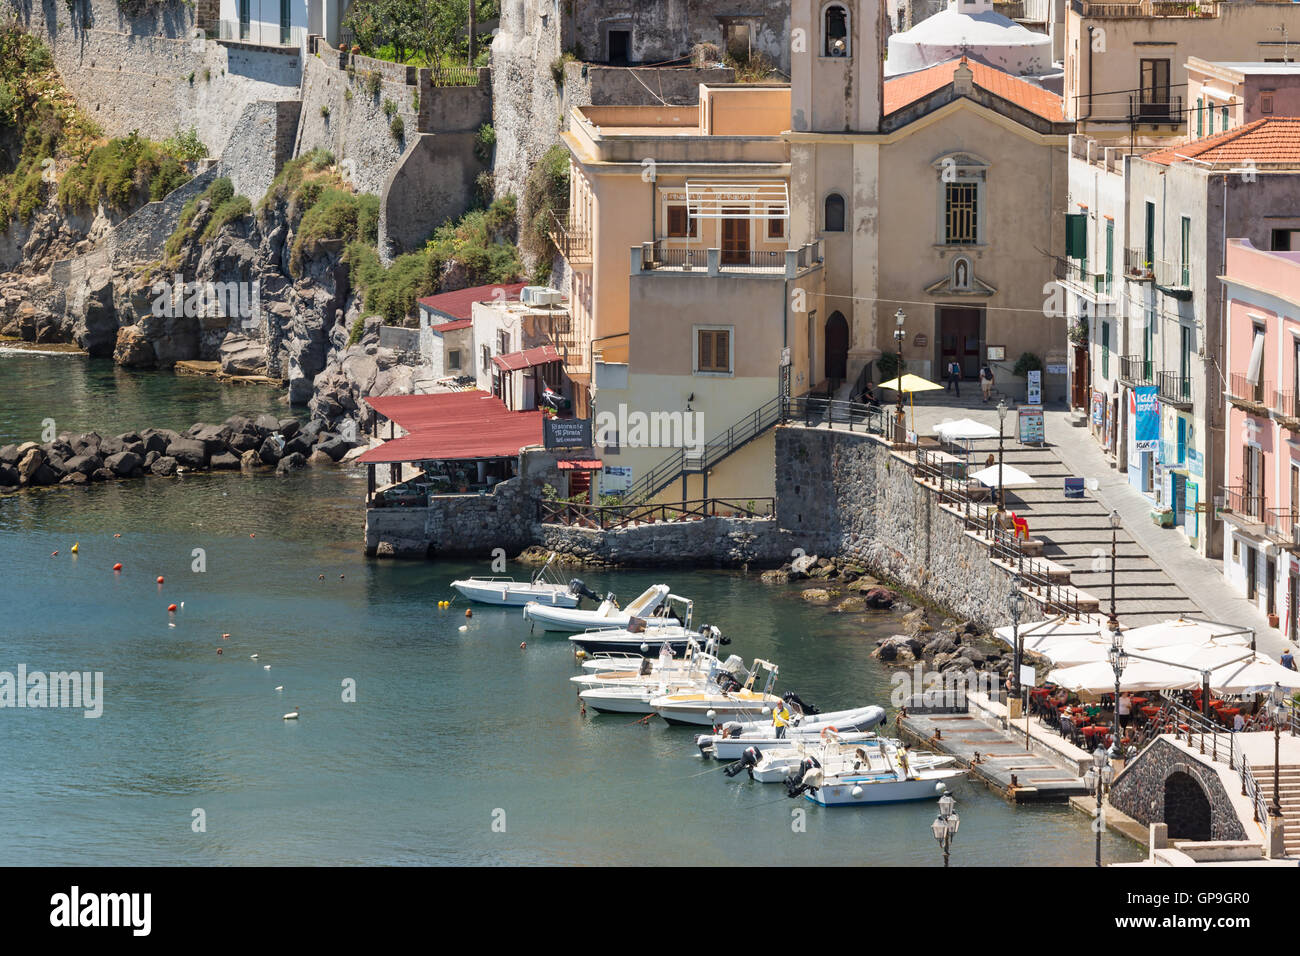 LIPARI, Italia - 24 de mayo: Vista aérea del puerto de Lipari en Mayo 24, 2016 en Islas Eolias cerca de Sicilia, Italia Foto de stock